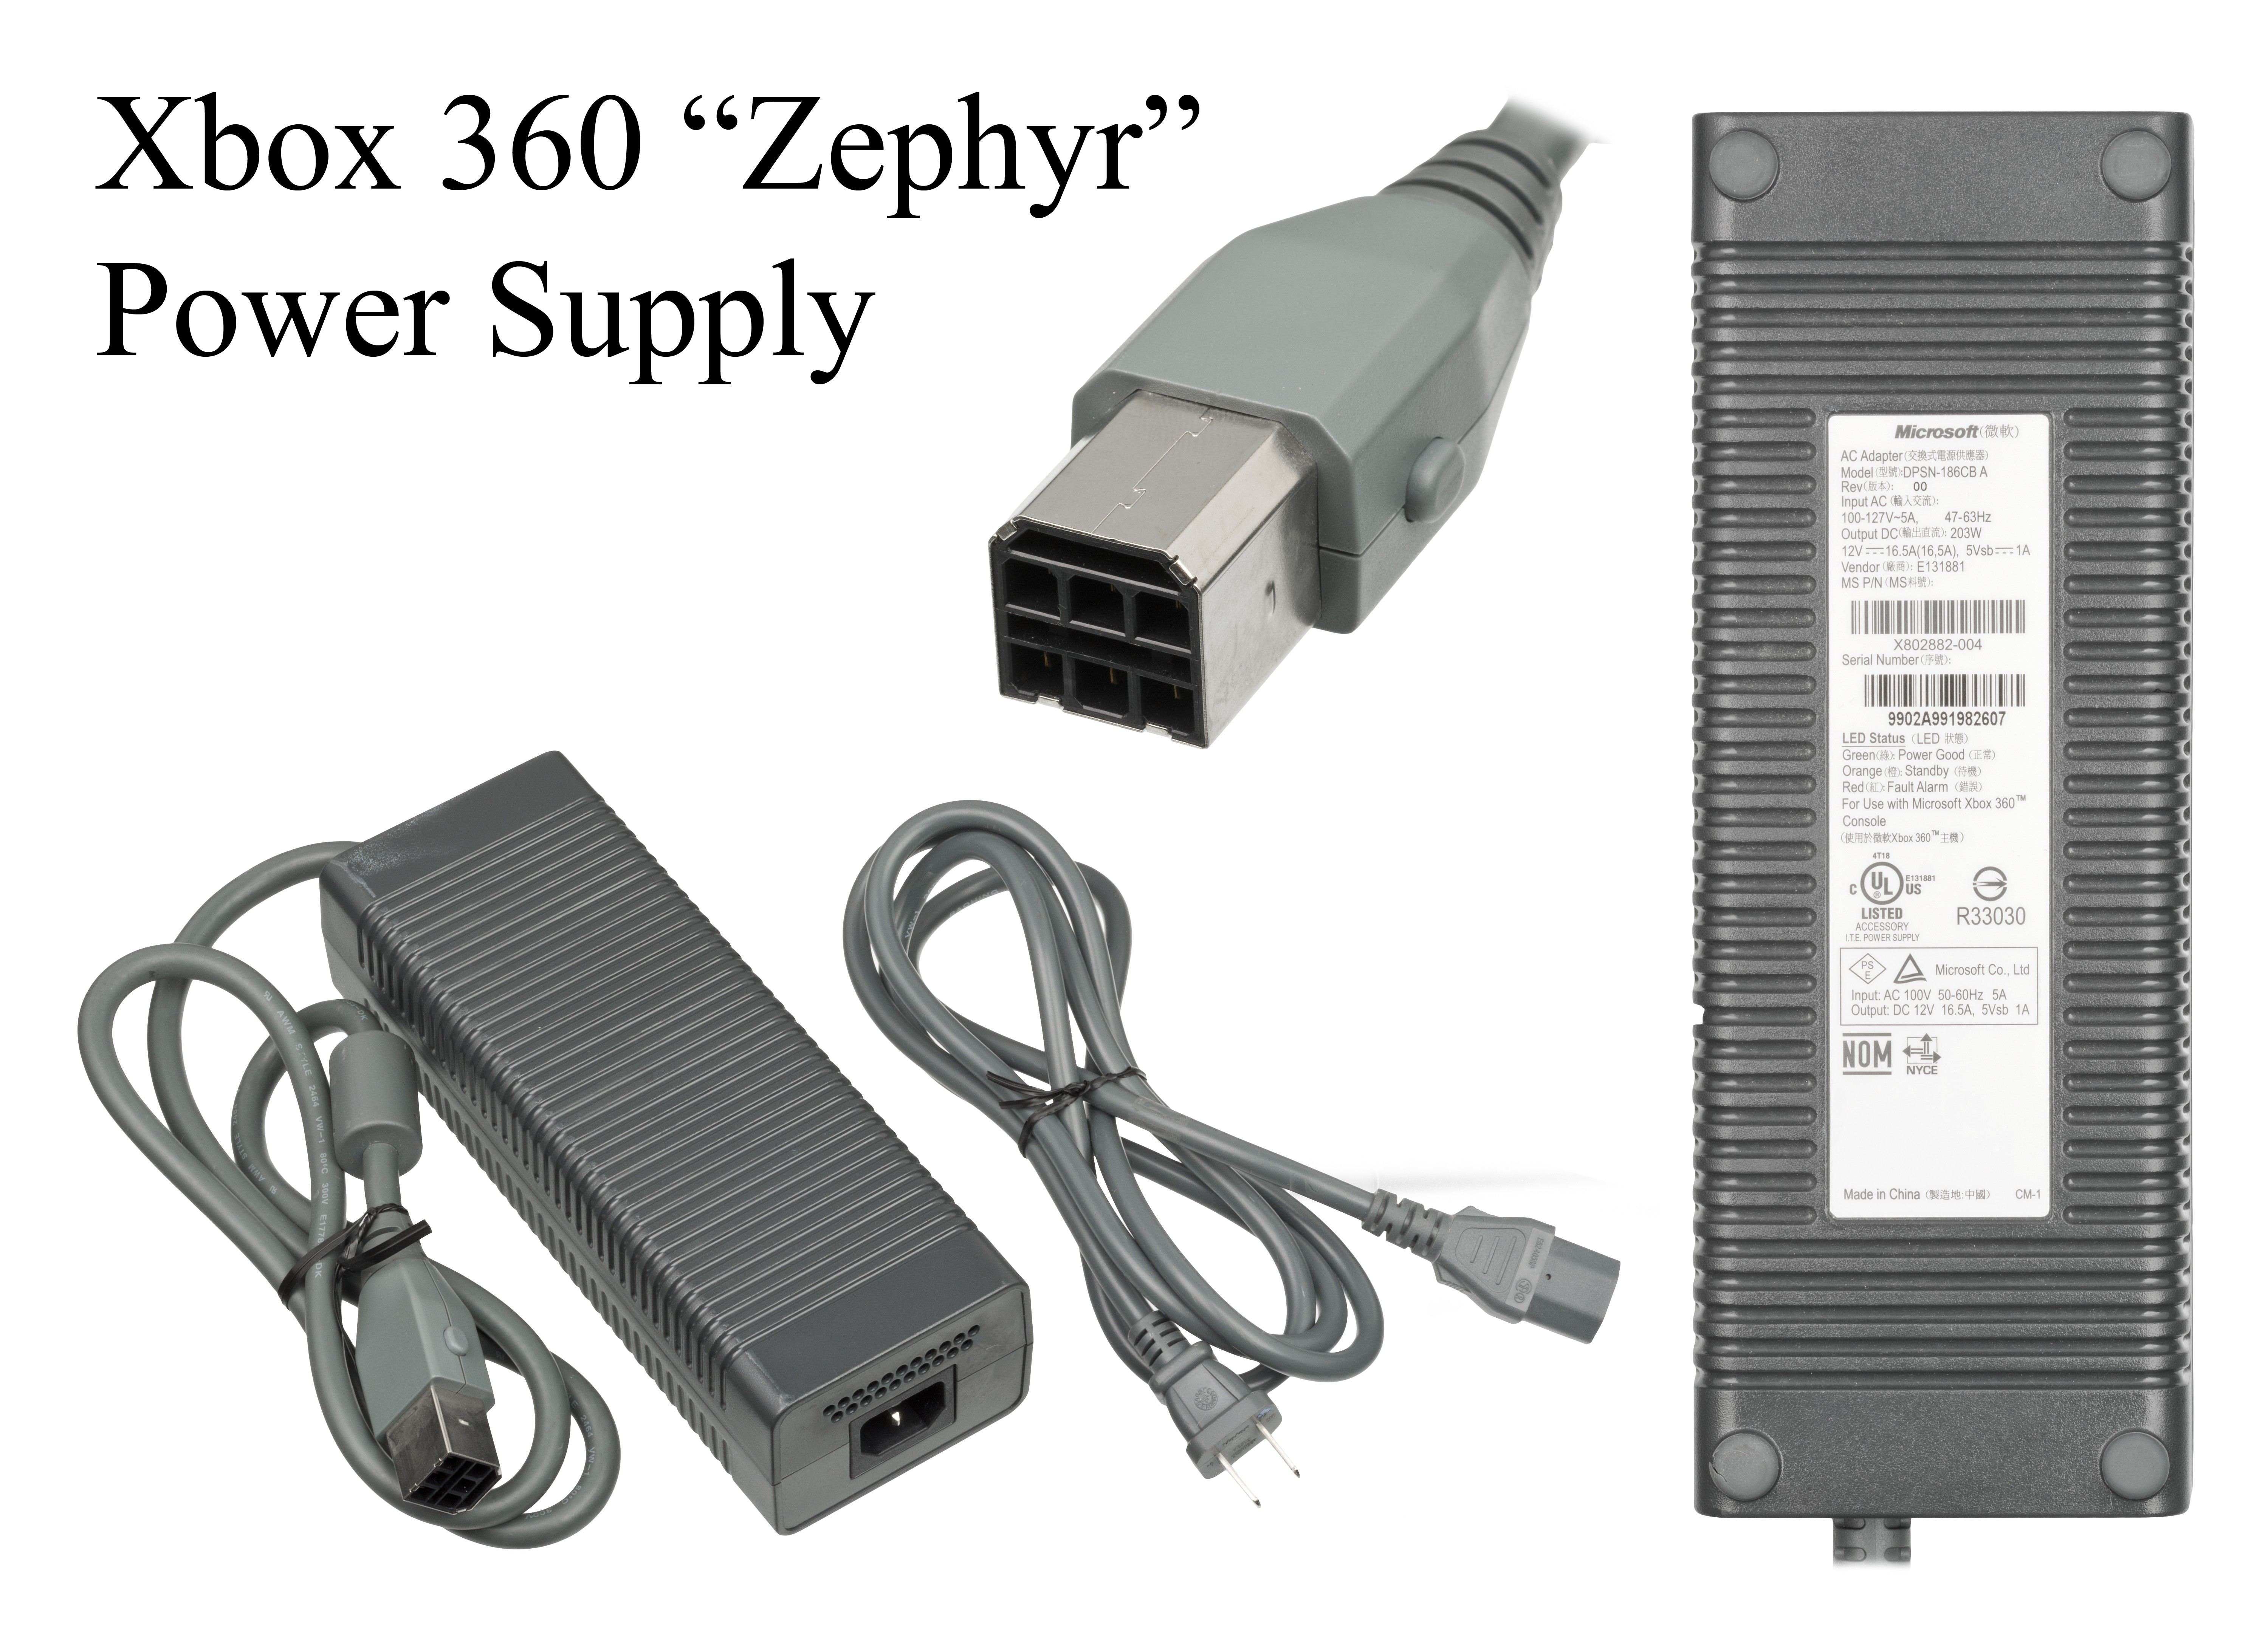 Xbox 360 E Power Supply Pinout File Microsoft Xbox 360 Power Supply Zephyr Wikimedia